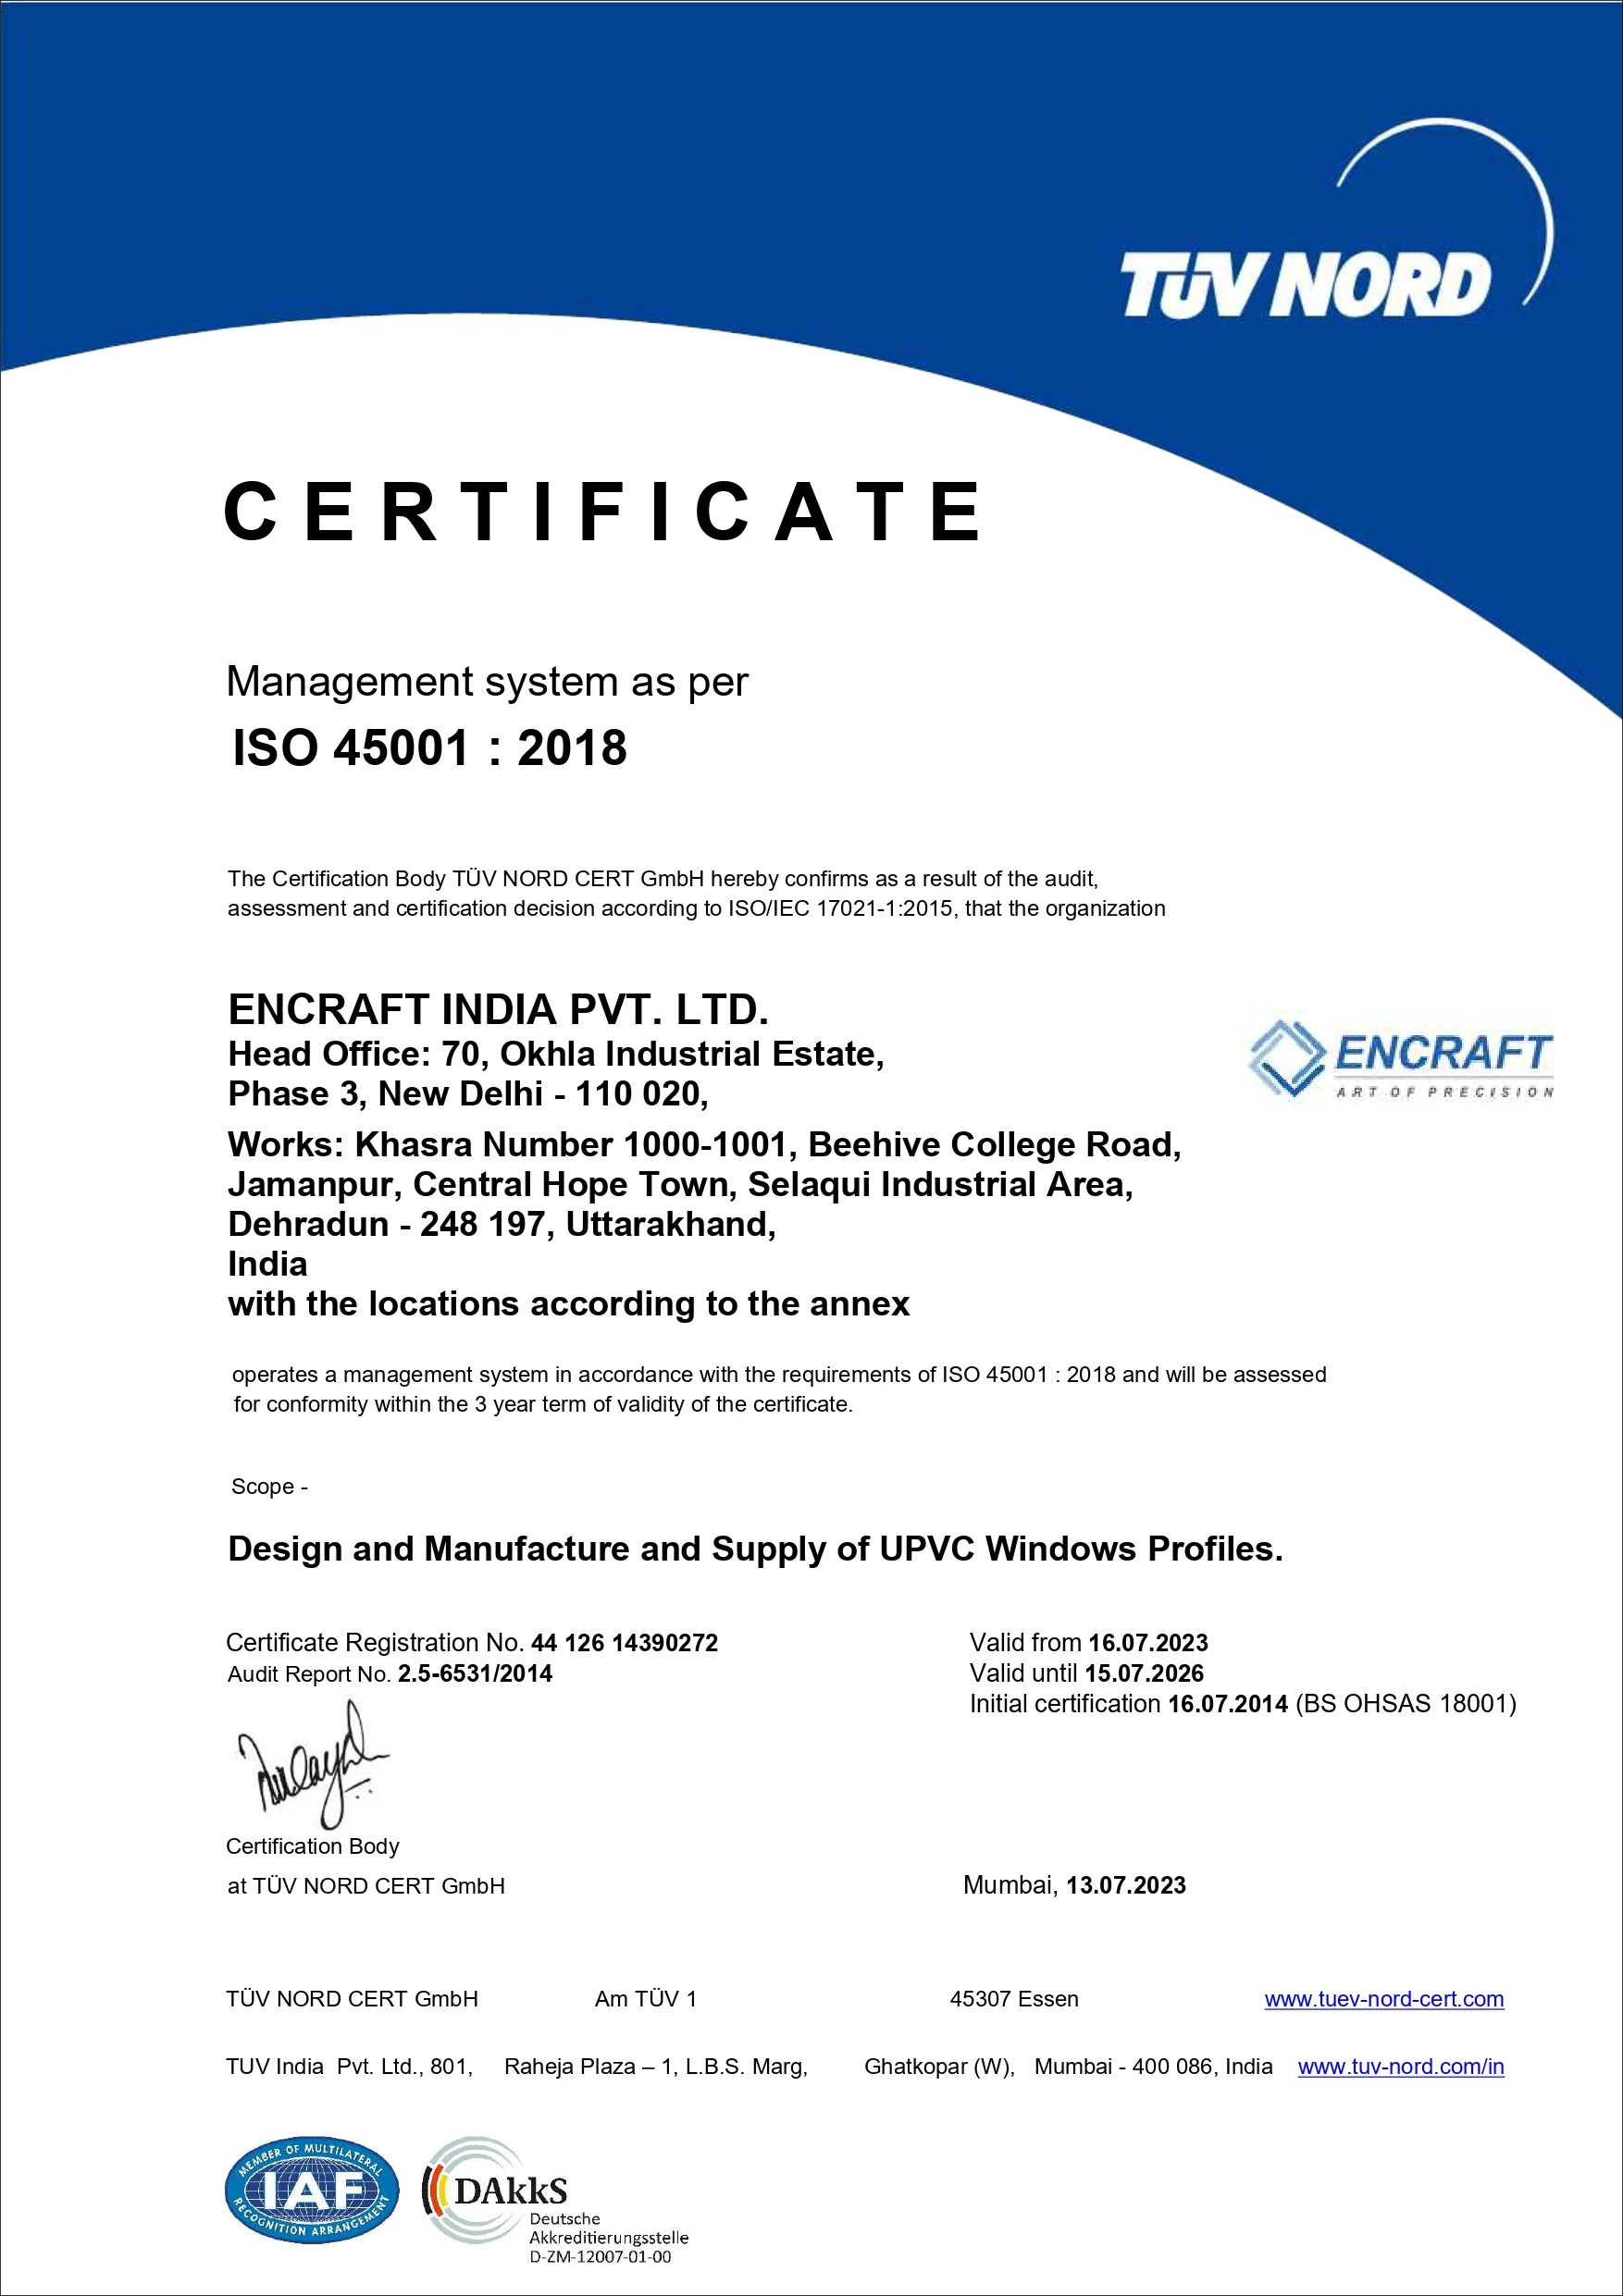 Encraft India Pvt Ltd